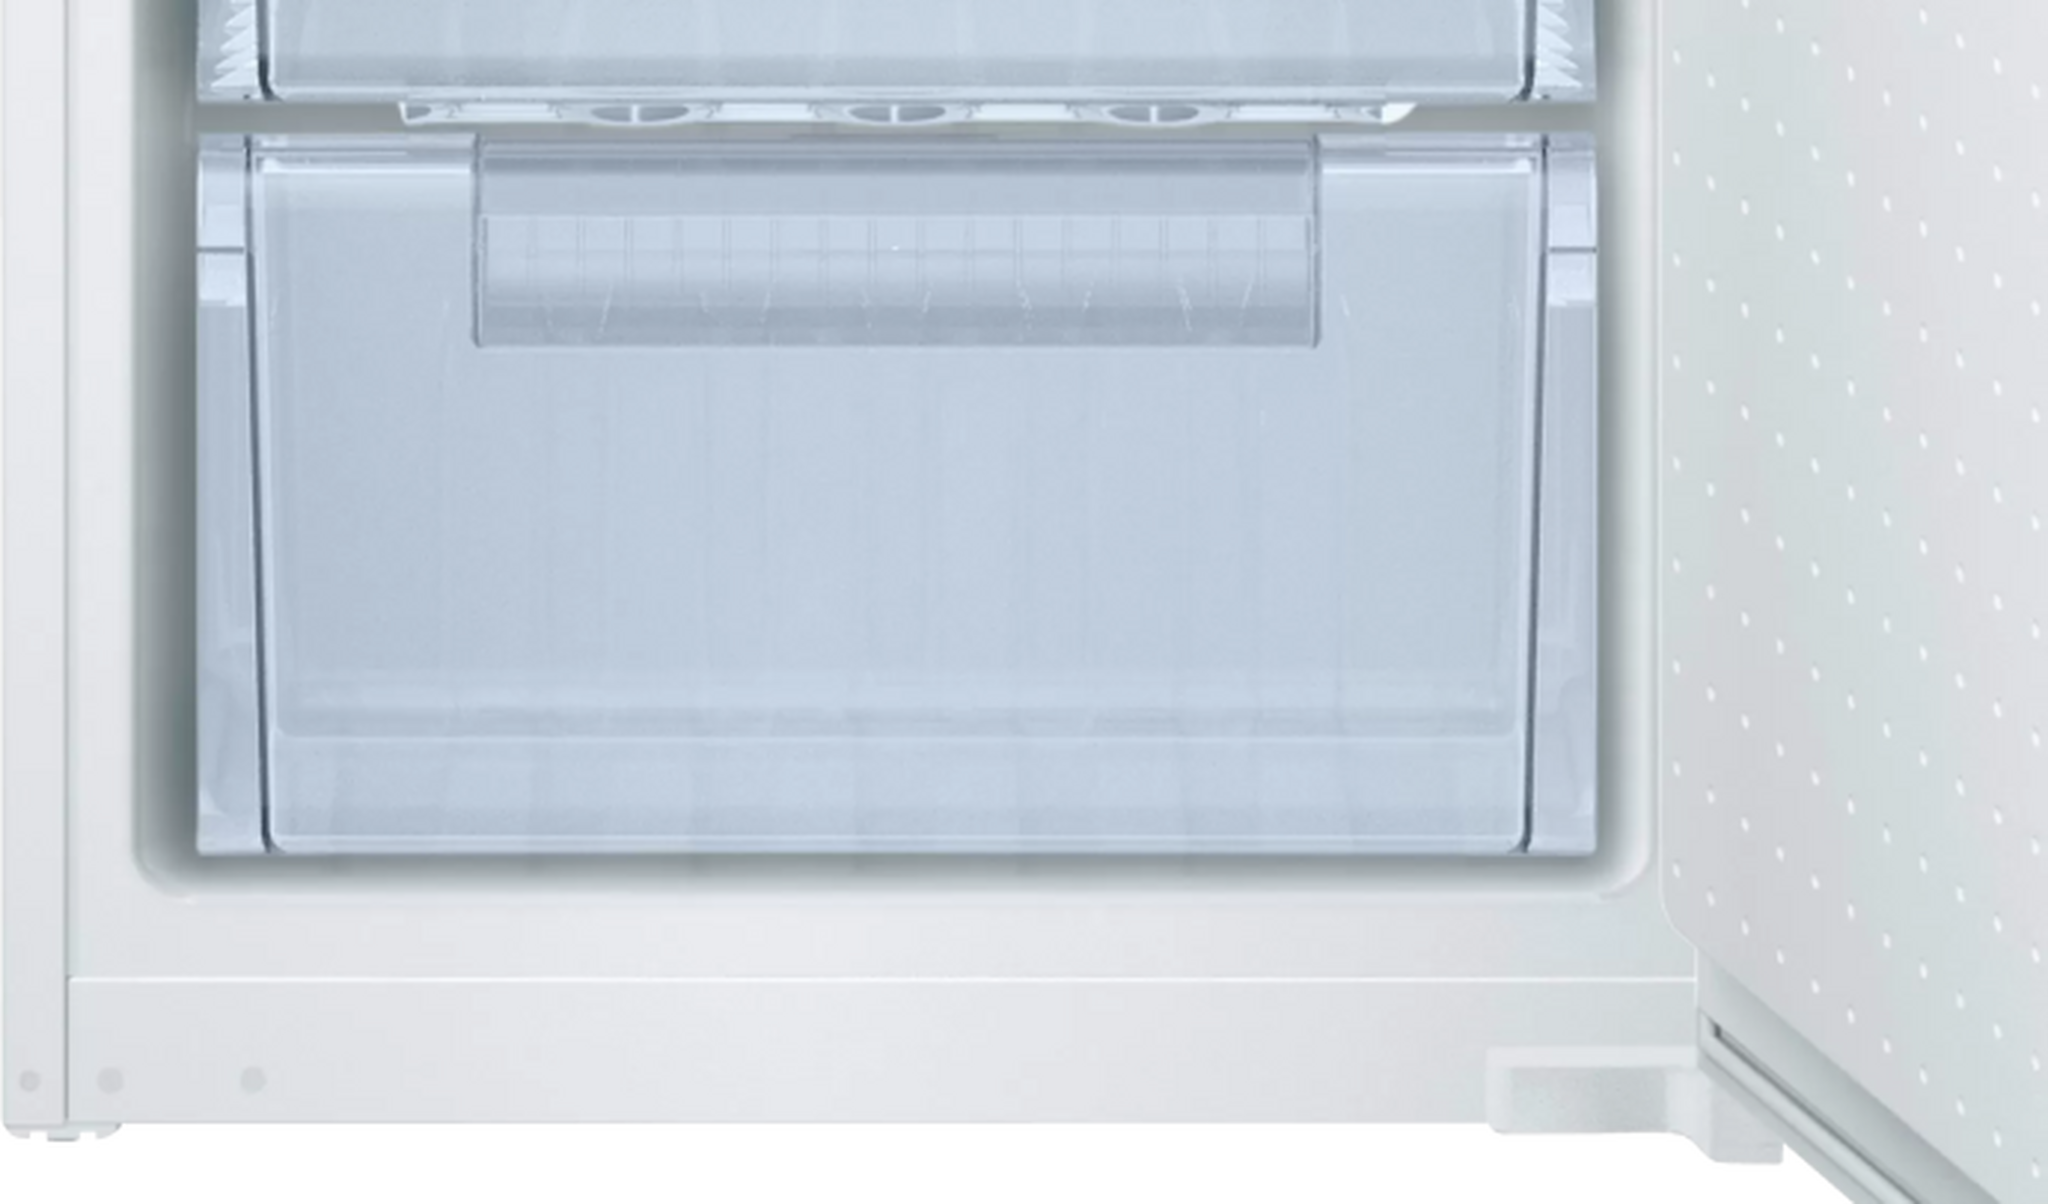 Bosch 10 CFT Built In Bottom Mount Refrigerator - White (KIV38X22GB)